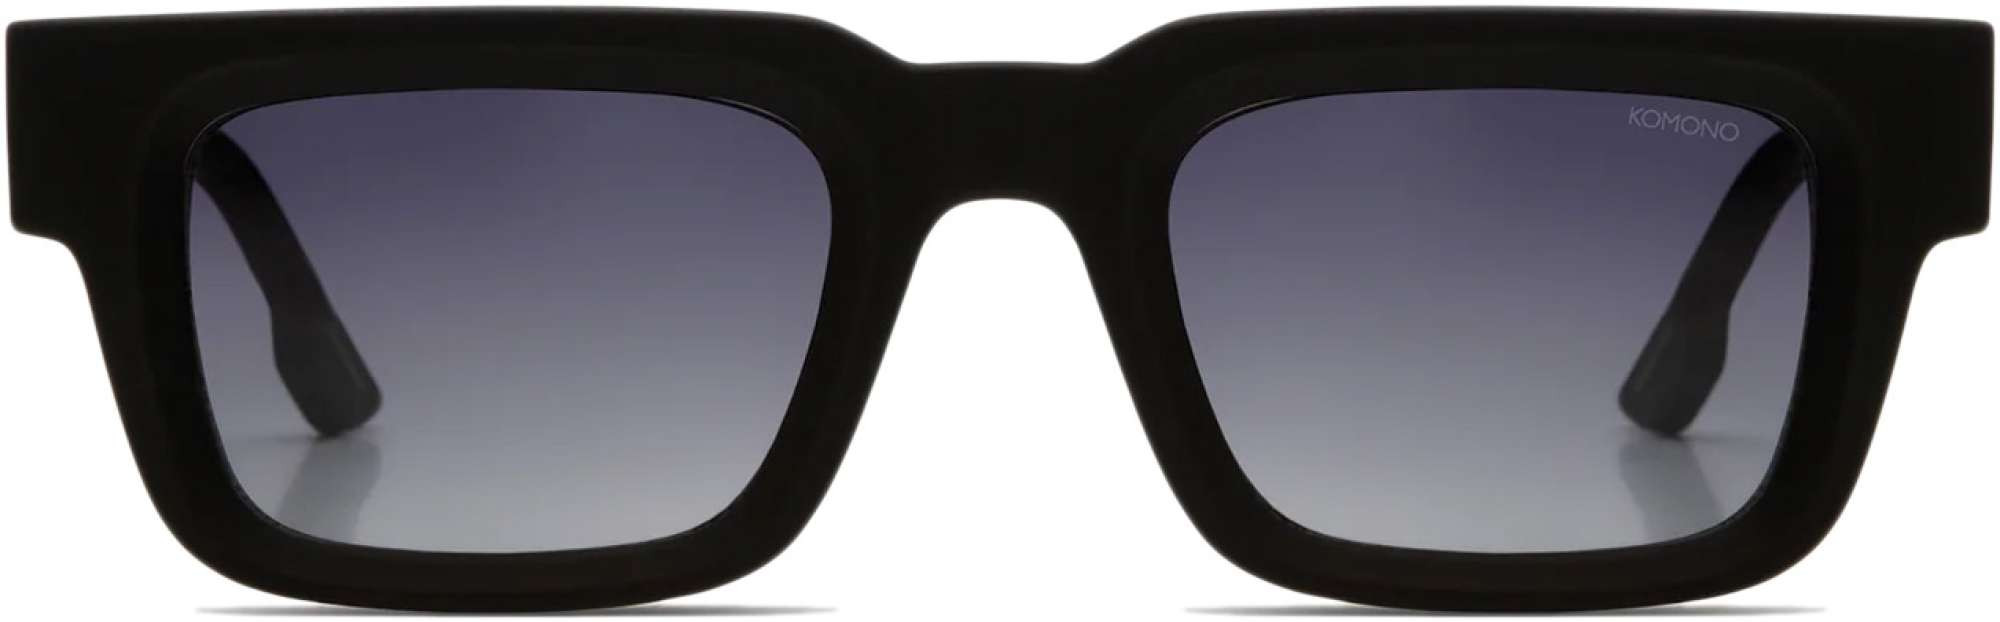 Afbeelding van Komono Victor sunglasses carbon black